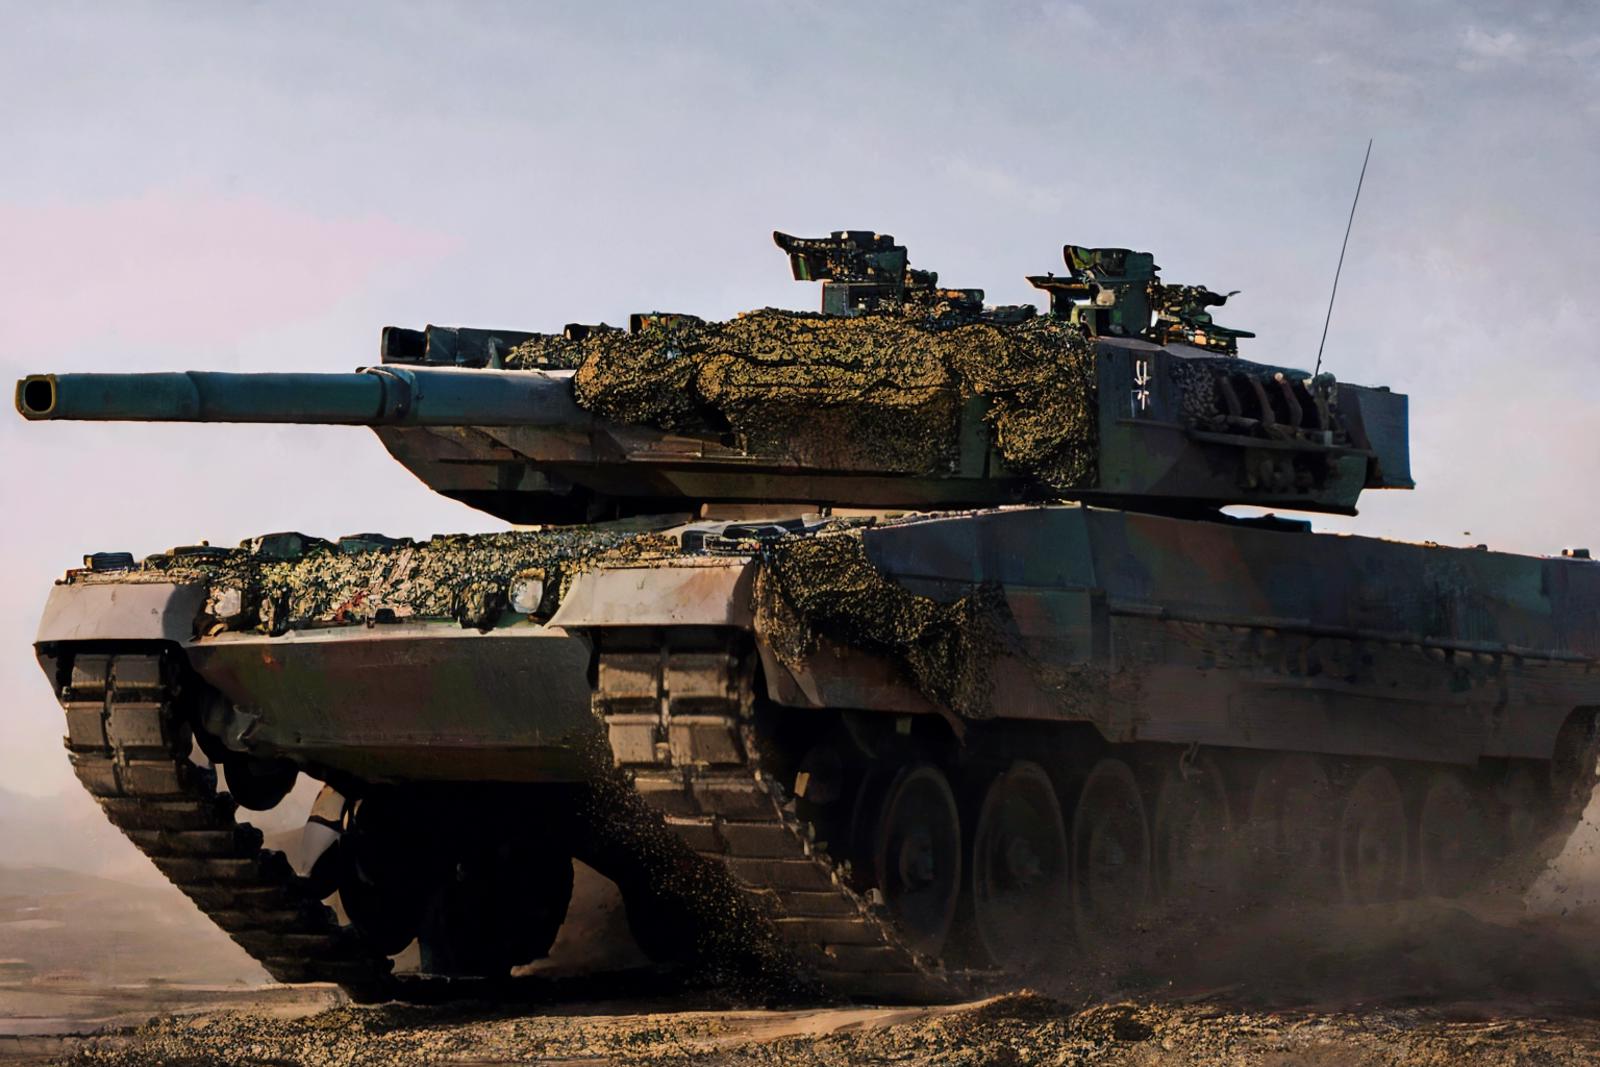 Leopard 2 ( Main battle tank ) image by richyrich515